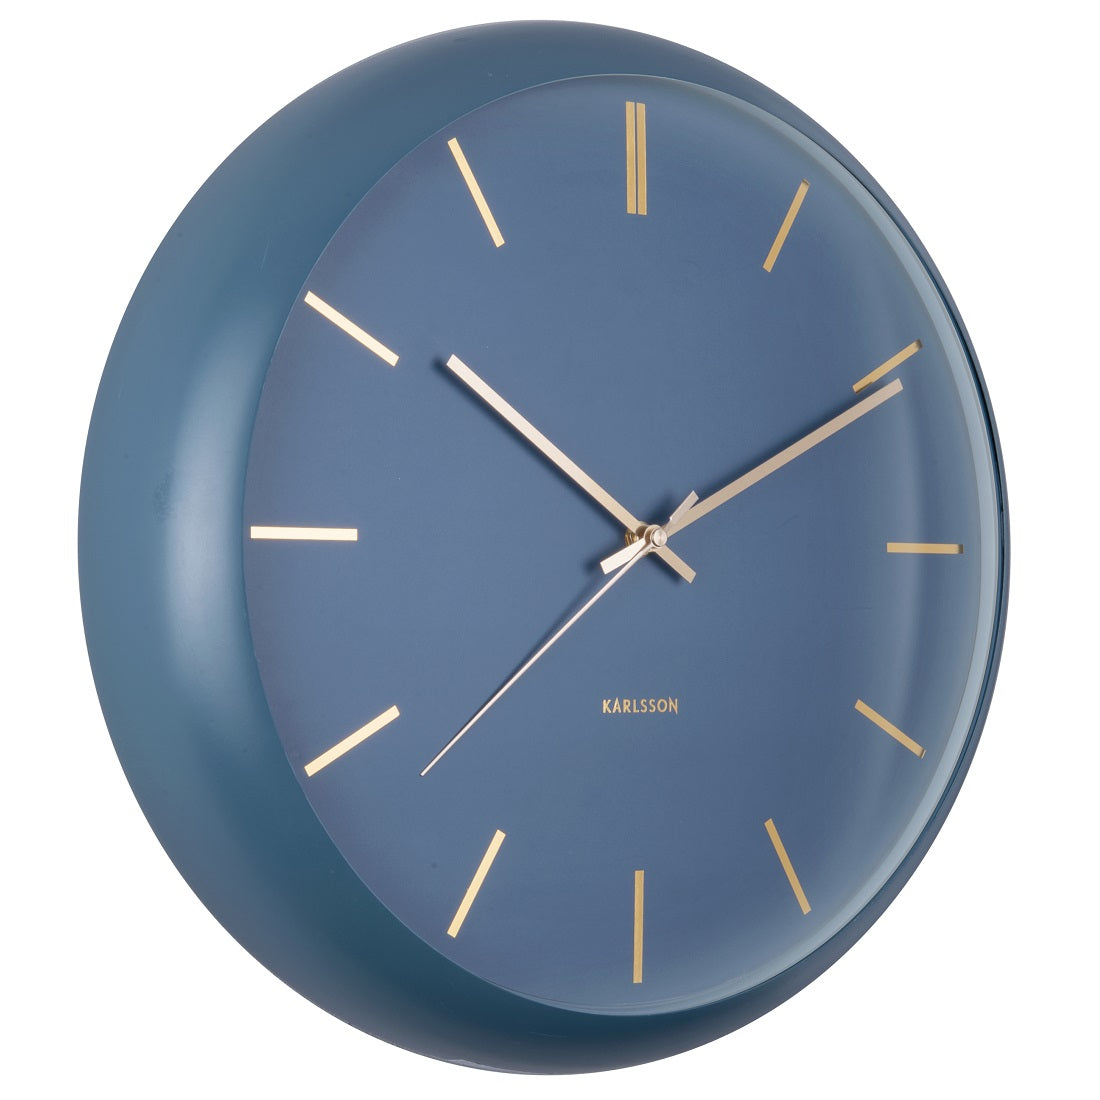 Clearance Sale - Karlsson Wall Clock Globe